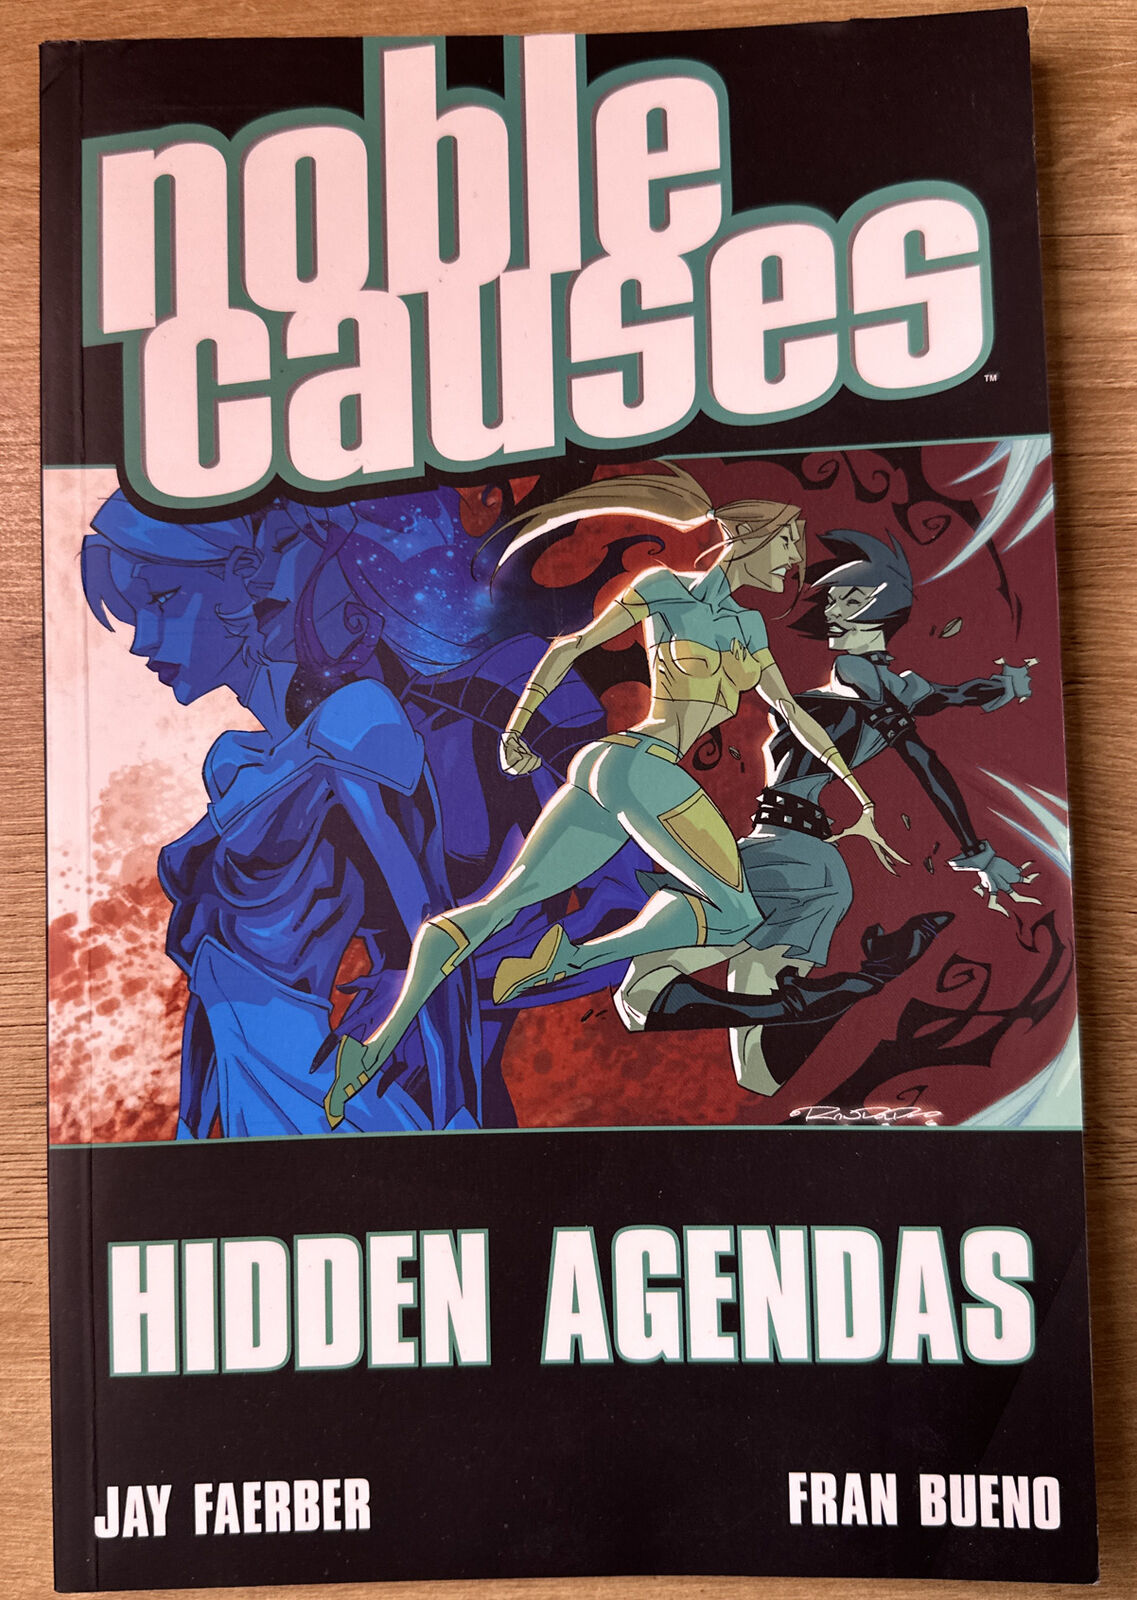 Noble Causes: Hidden Agendas Vol. 6 by Jay Faerber (2006, Paperback)